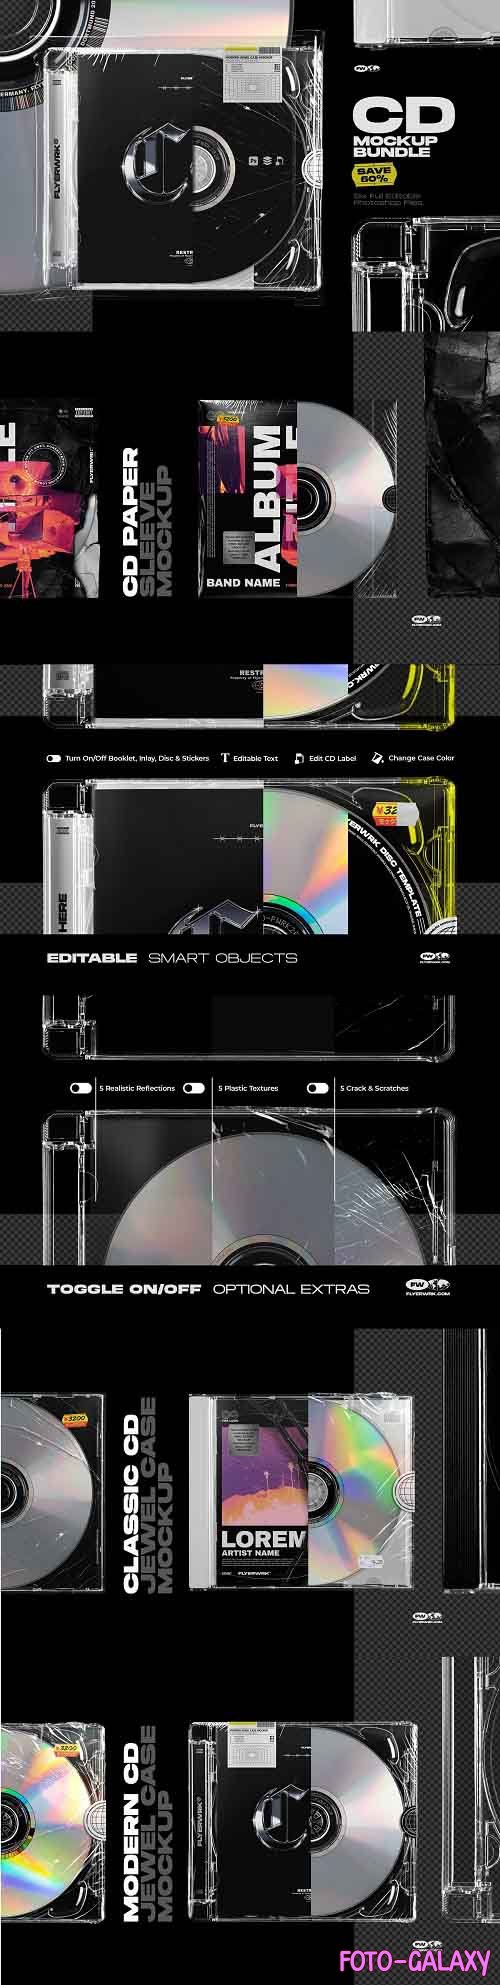 CreativeMarket - CD Mockup Bundle 5485024